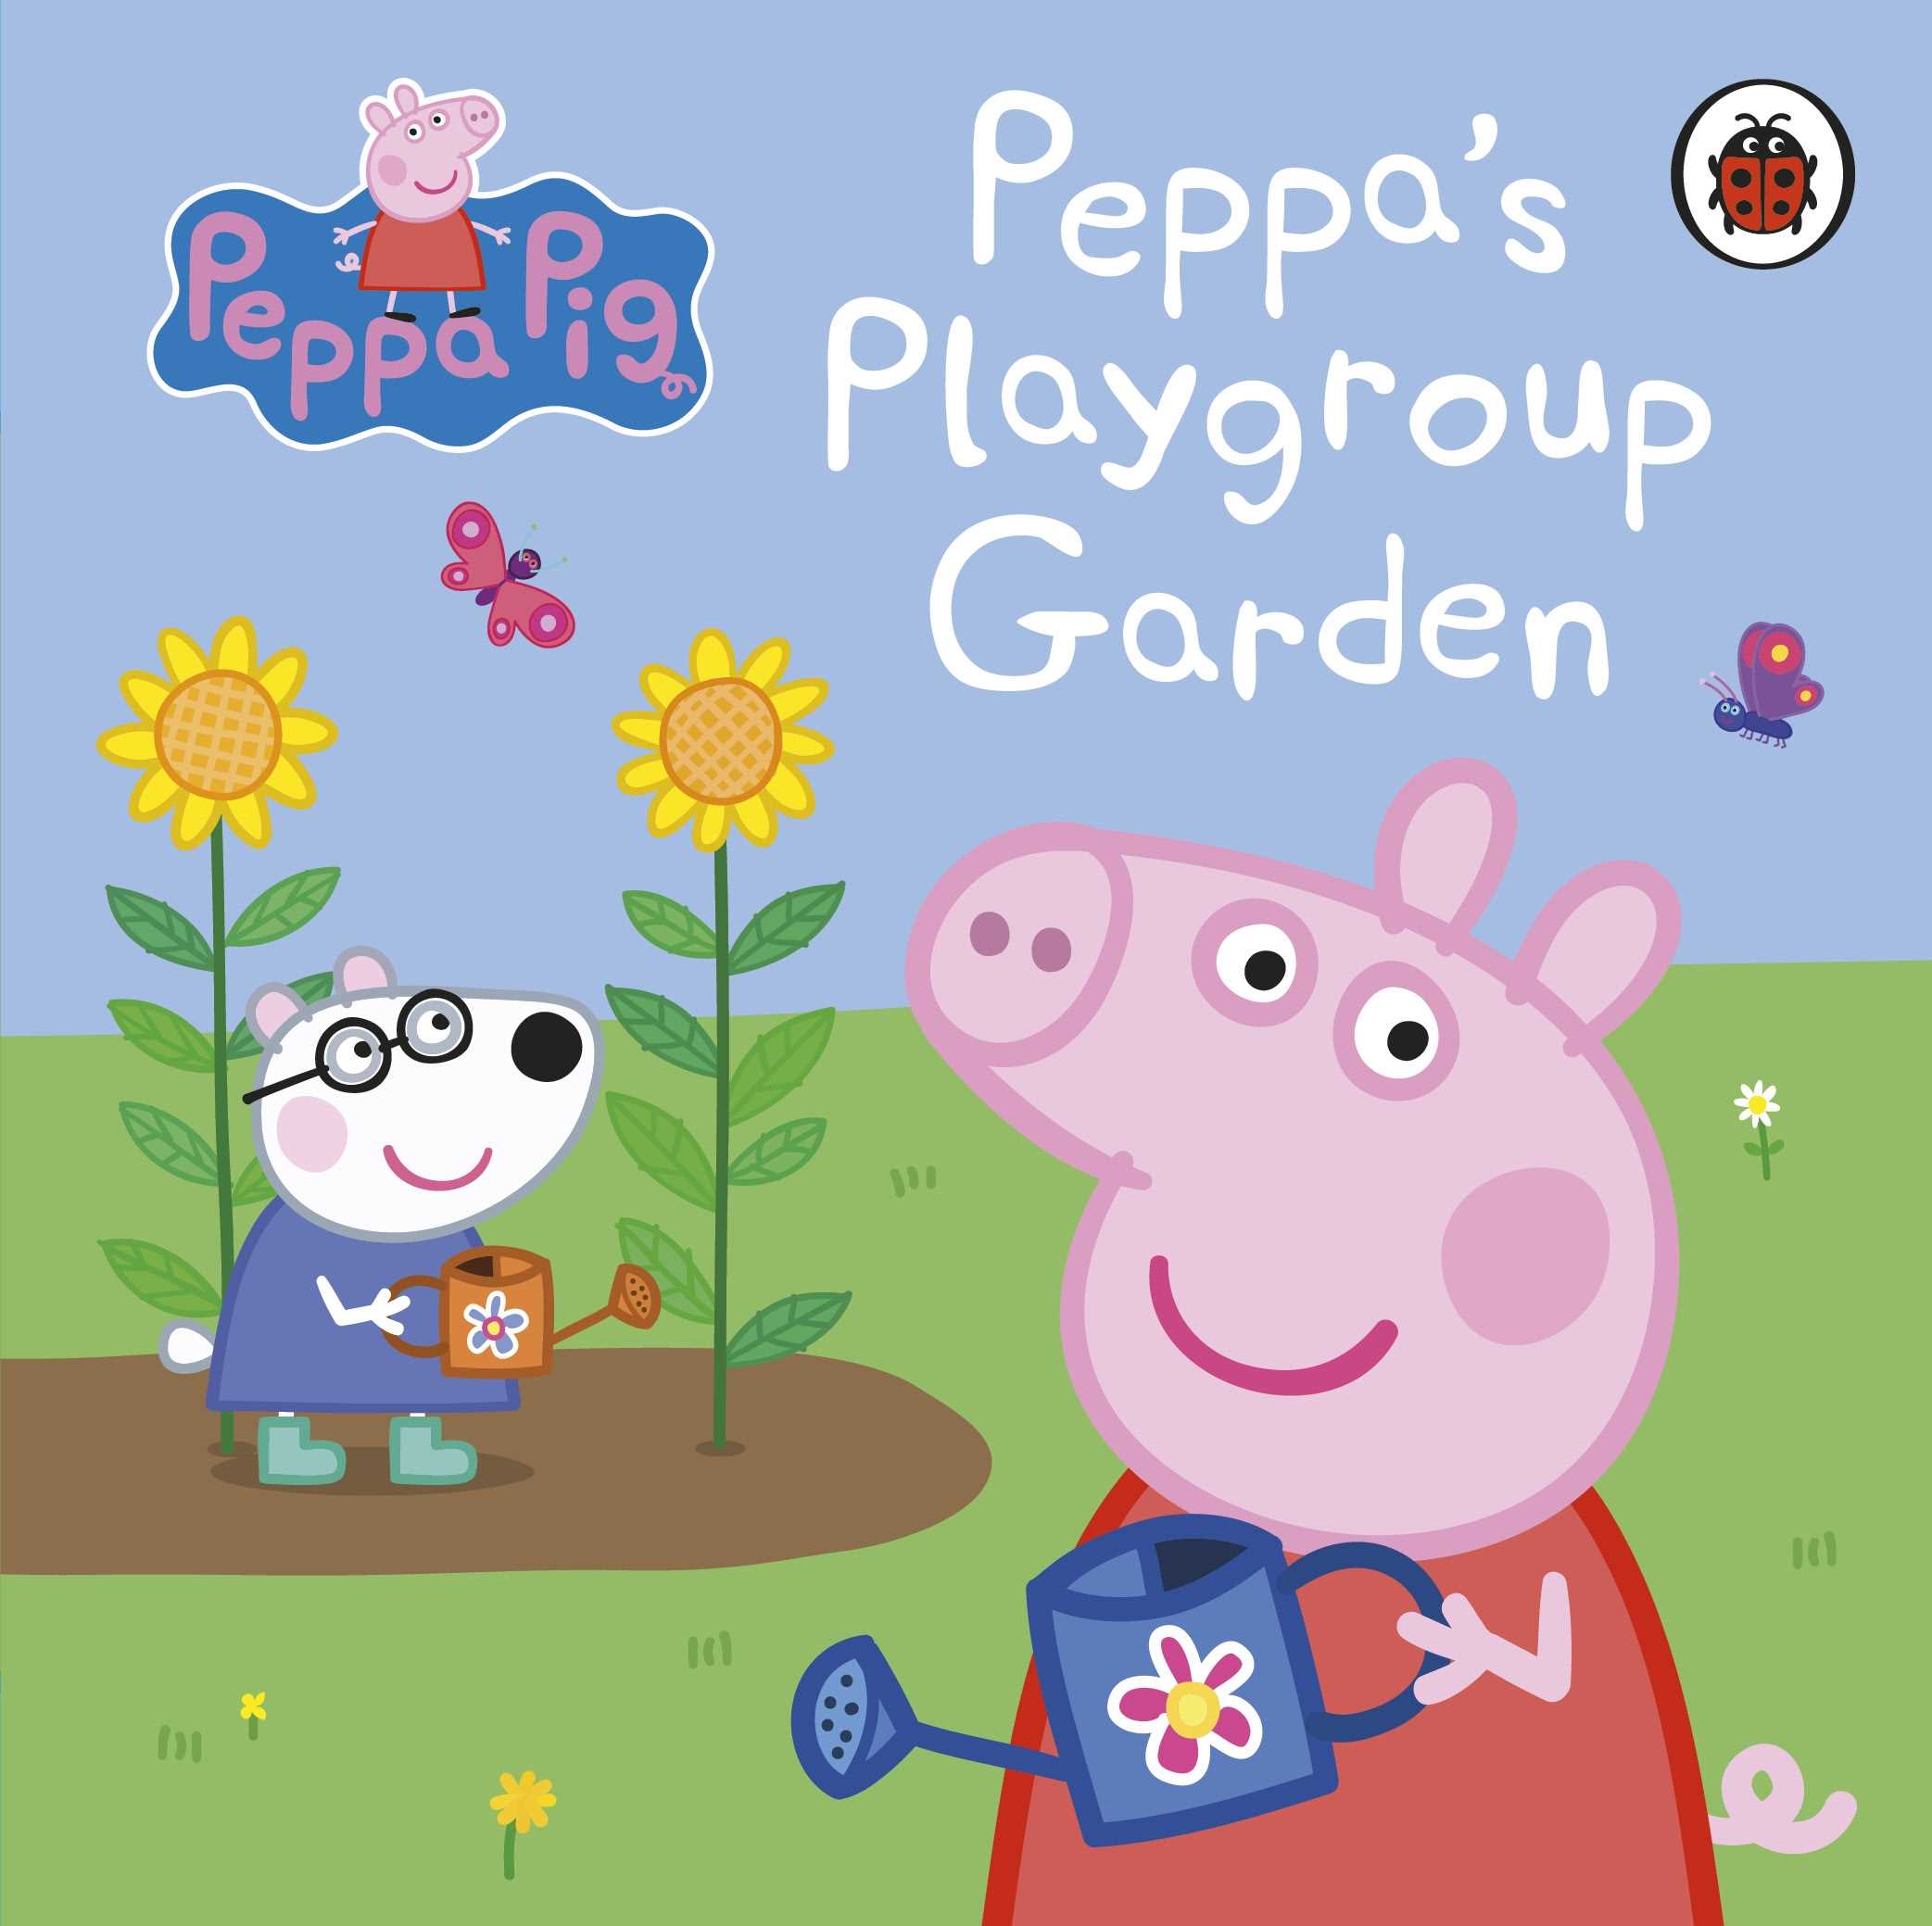 Peppa's Playgroup Garden